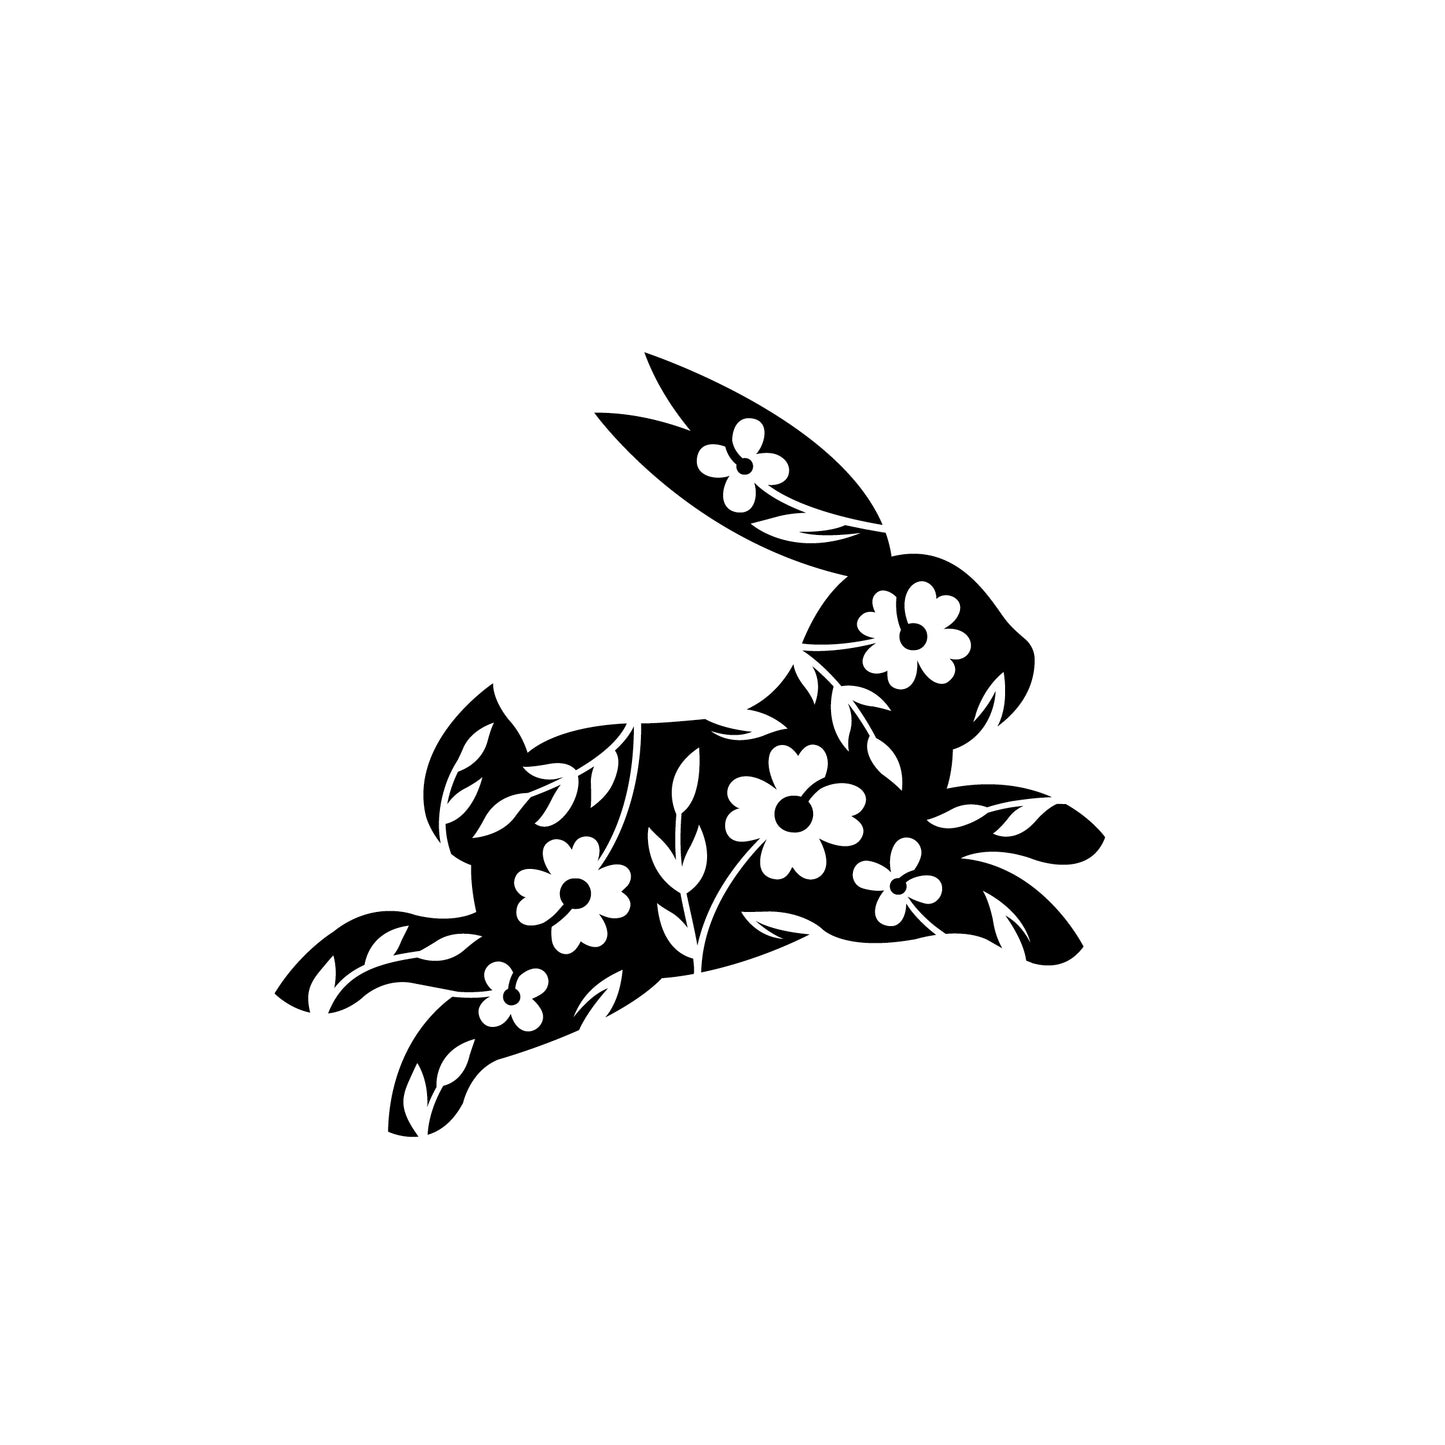 Rabbit made of flowers wall decal sticker design